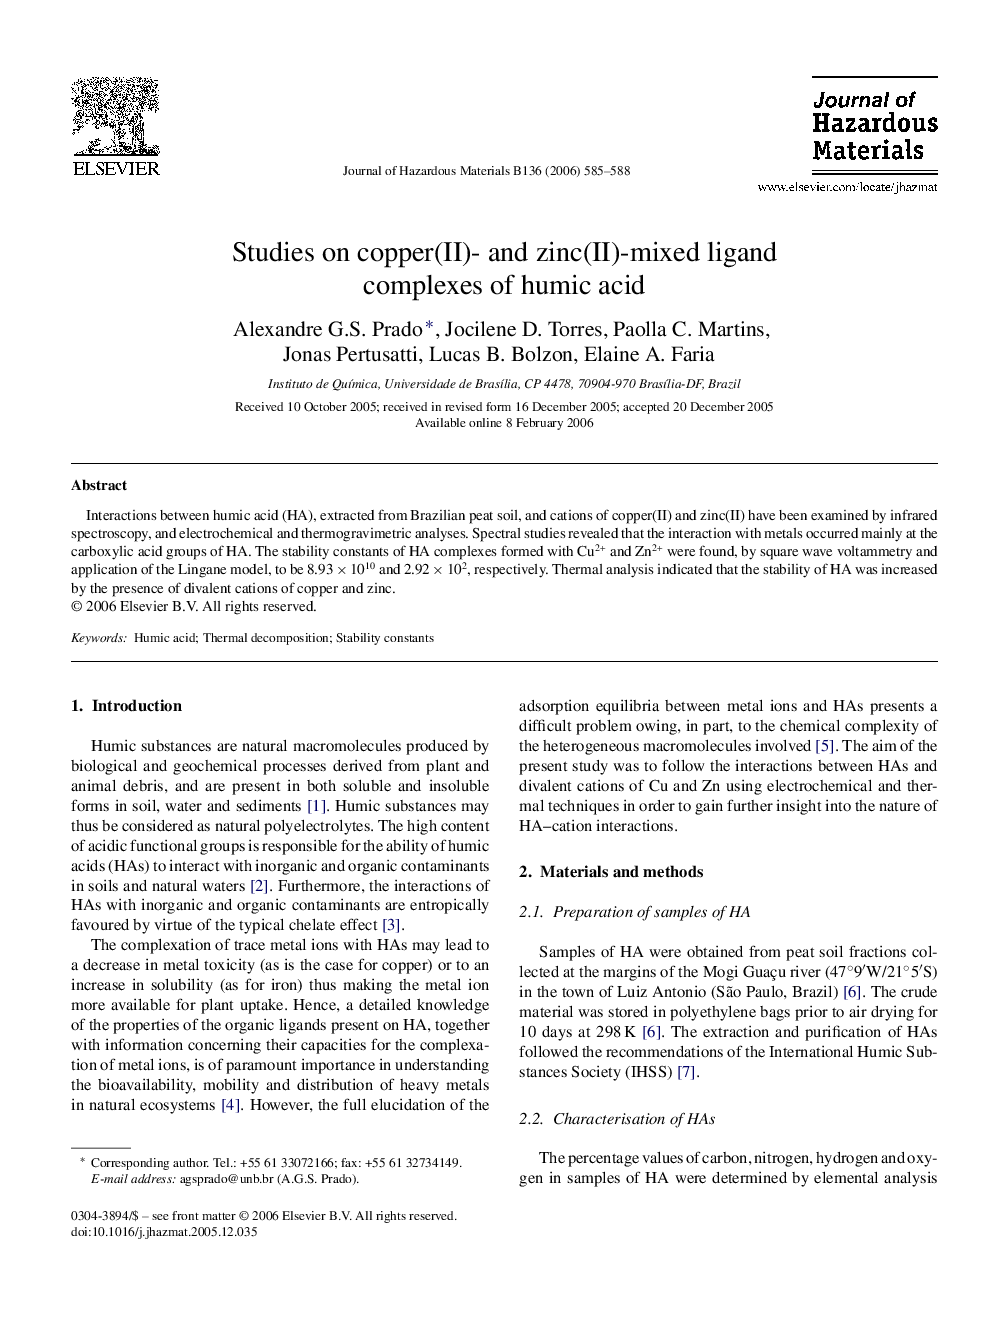 Studies on copper(II)- and zinc(II)-mixed ligand complexes of humic acid